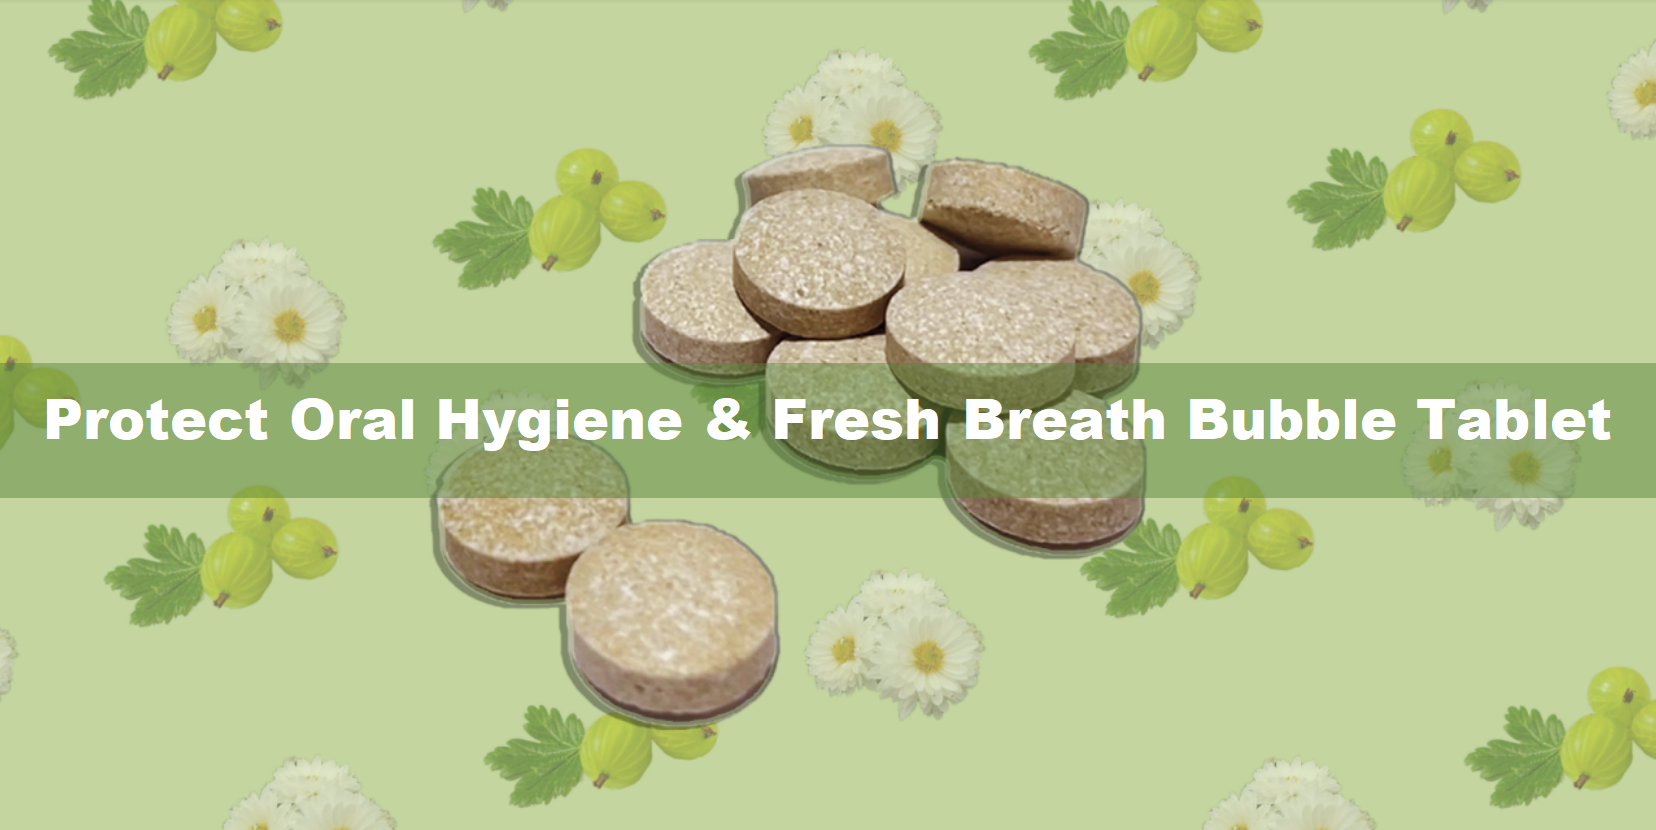 Protect Oral Hygiene & Fresh Breath Bubble Tablet